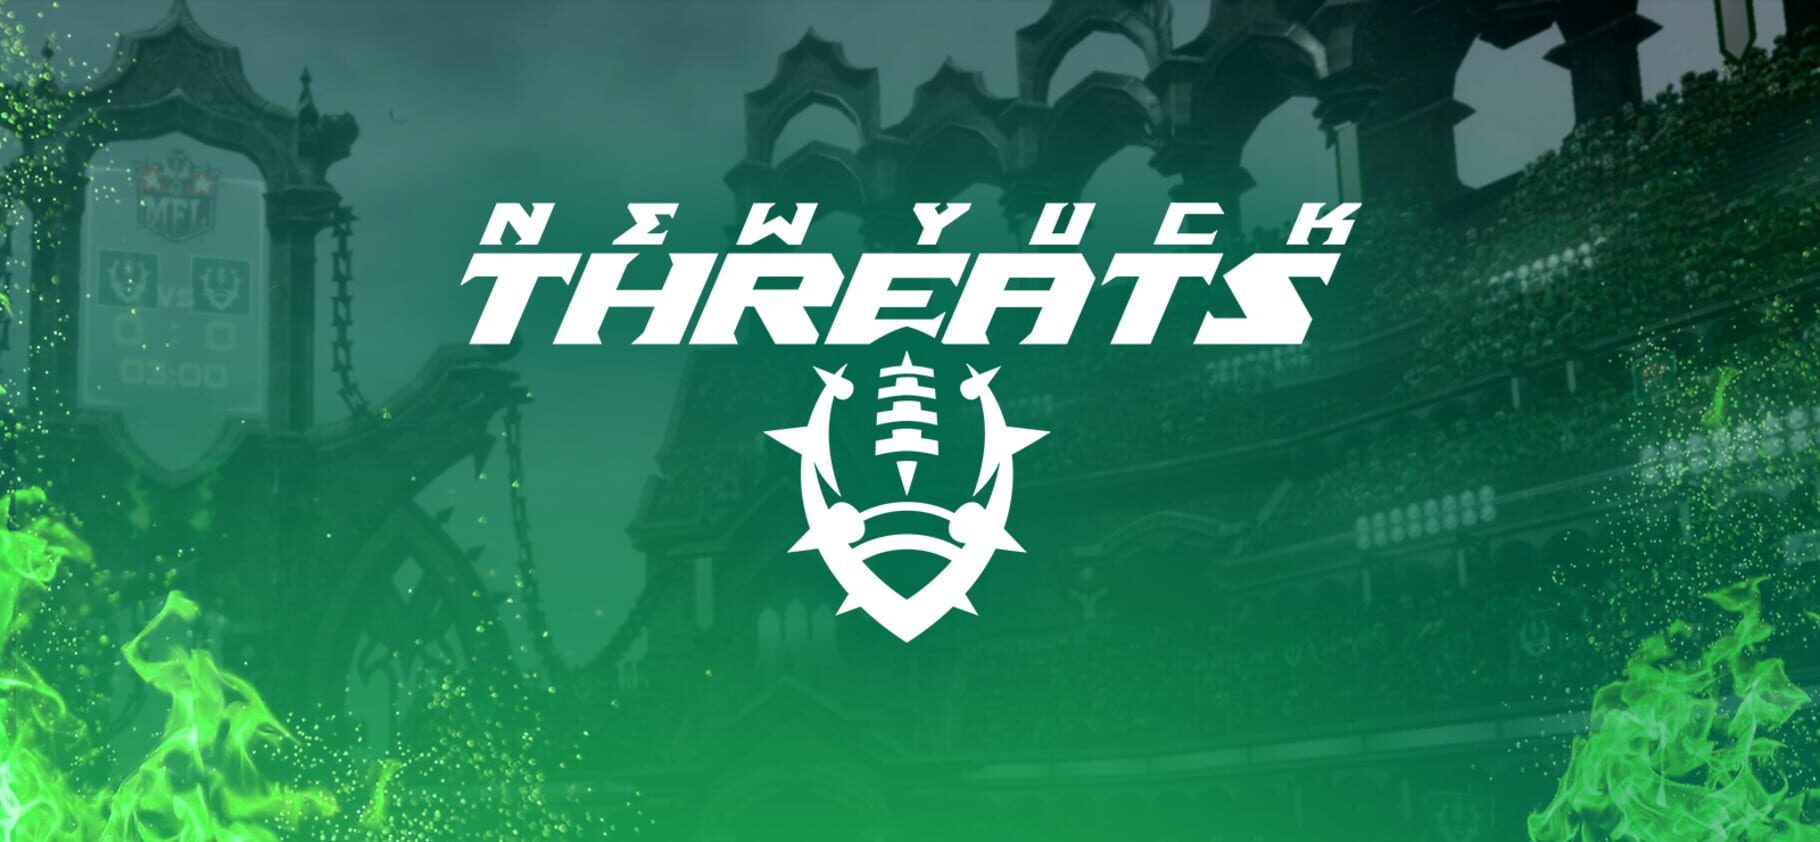 Mutant Football League: New Yuck Threats artwork